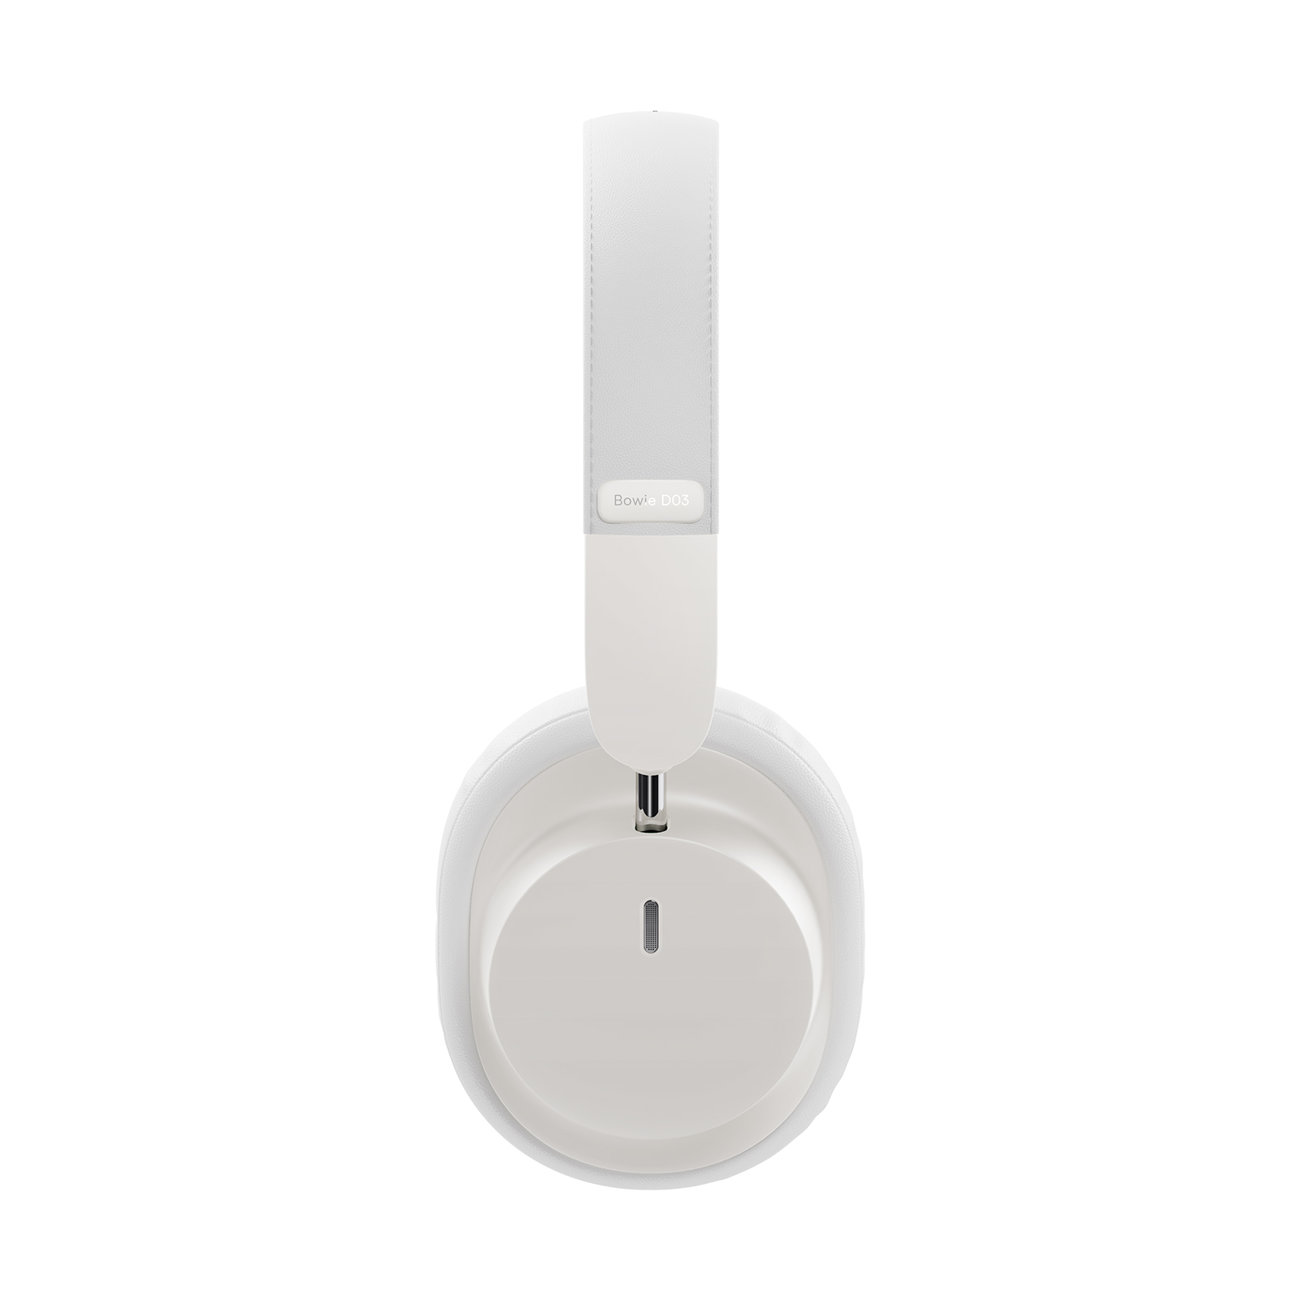 Baseus Bowie D03 over-ear wireless headphones - white